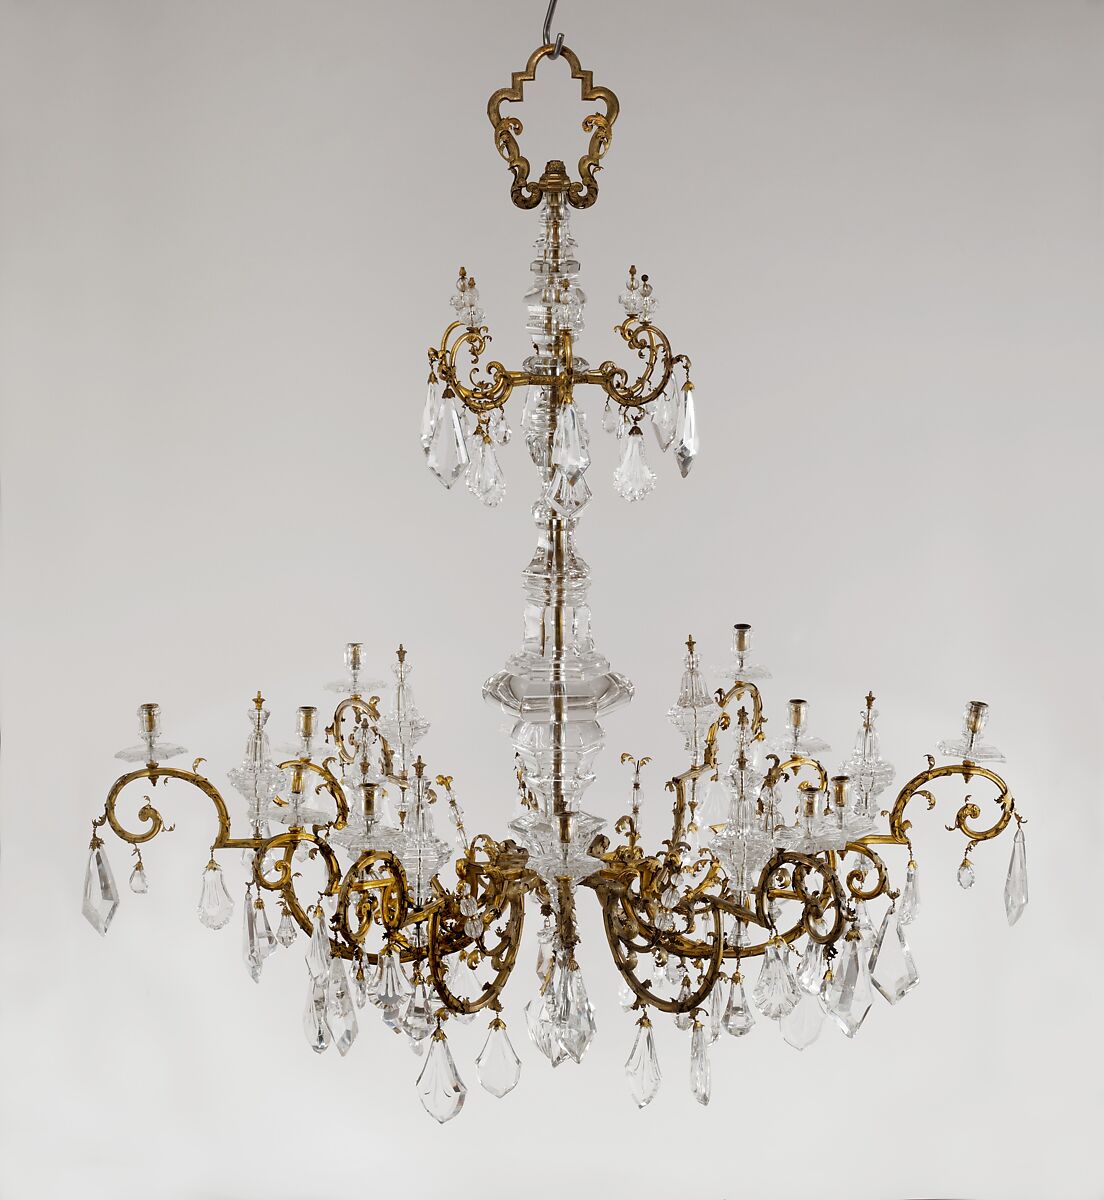 Twelve-light chandelier, attributed to Giovanni Battista Metellino (Italian, died 1724), Gilt steel (gilding not original) and rock crystal, Italian, Milan 